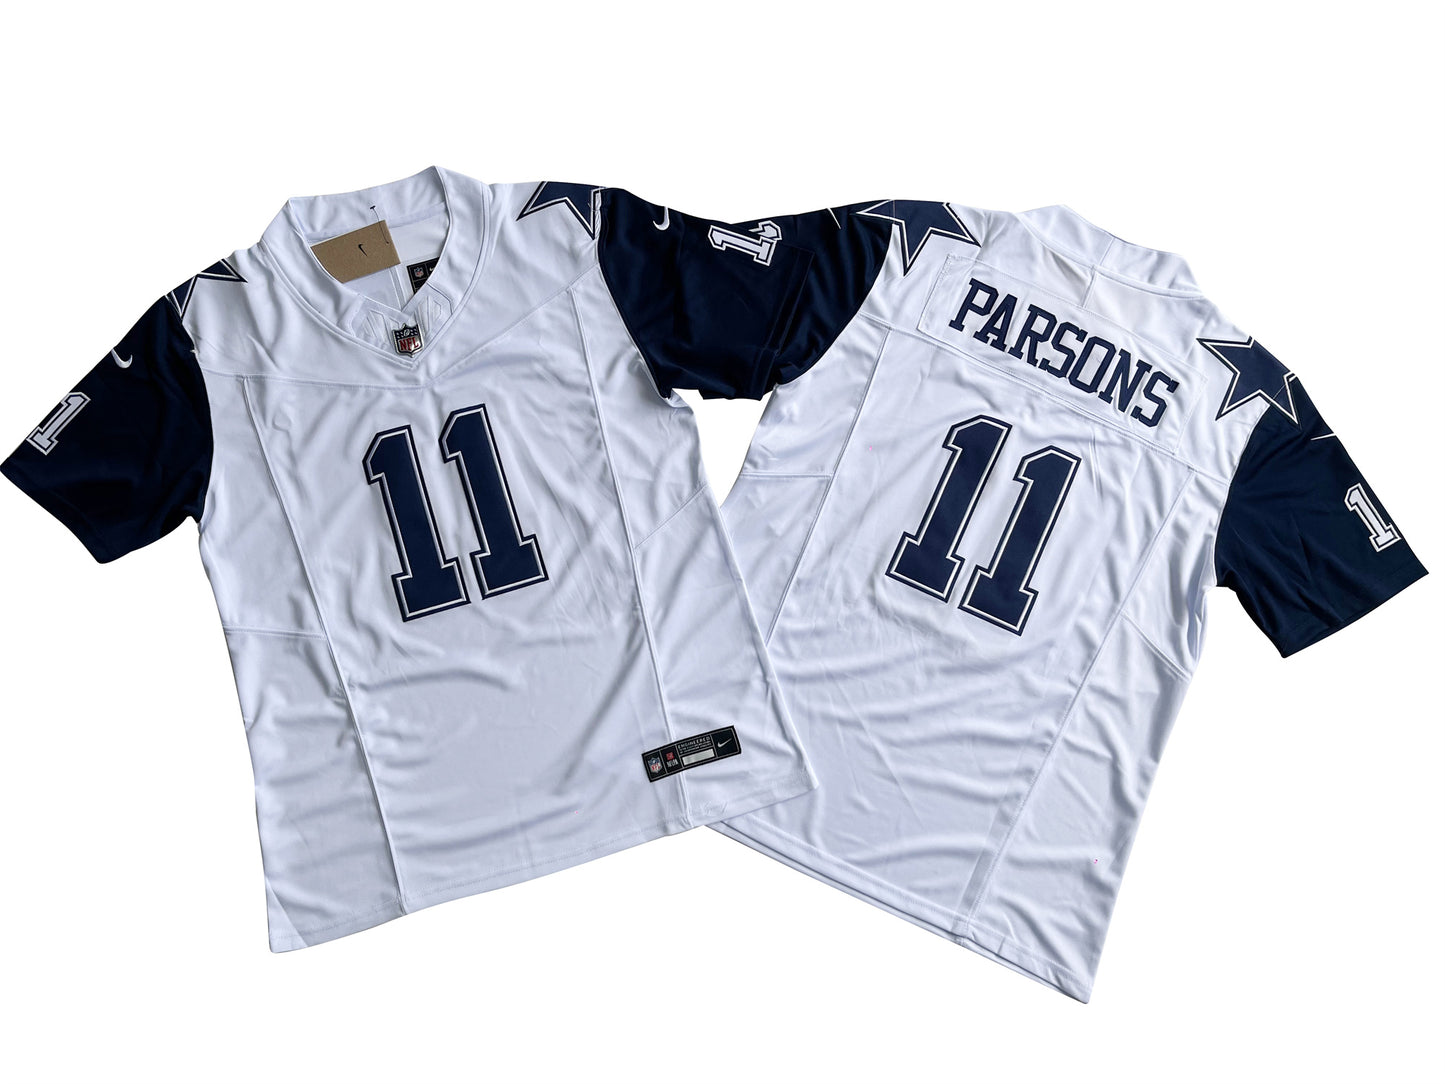 Micah Parsons Dallas Cowboys NFL F.U.S.E Style Nike Vapor Classic Throwback Alternate Jersey - White